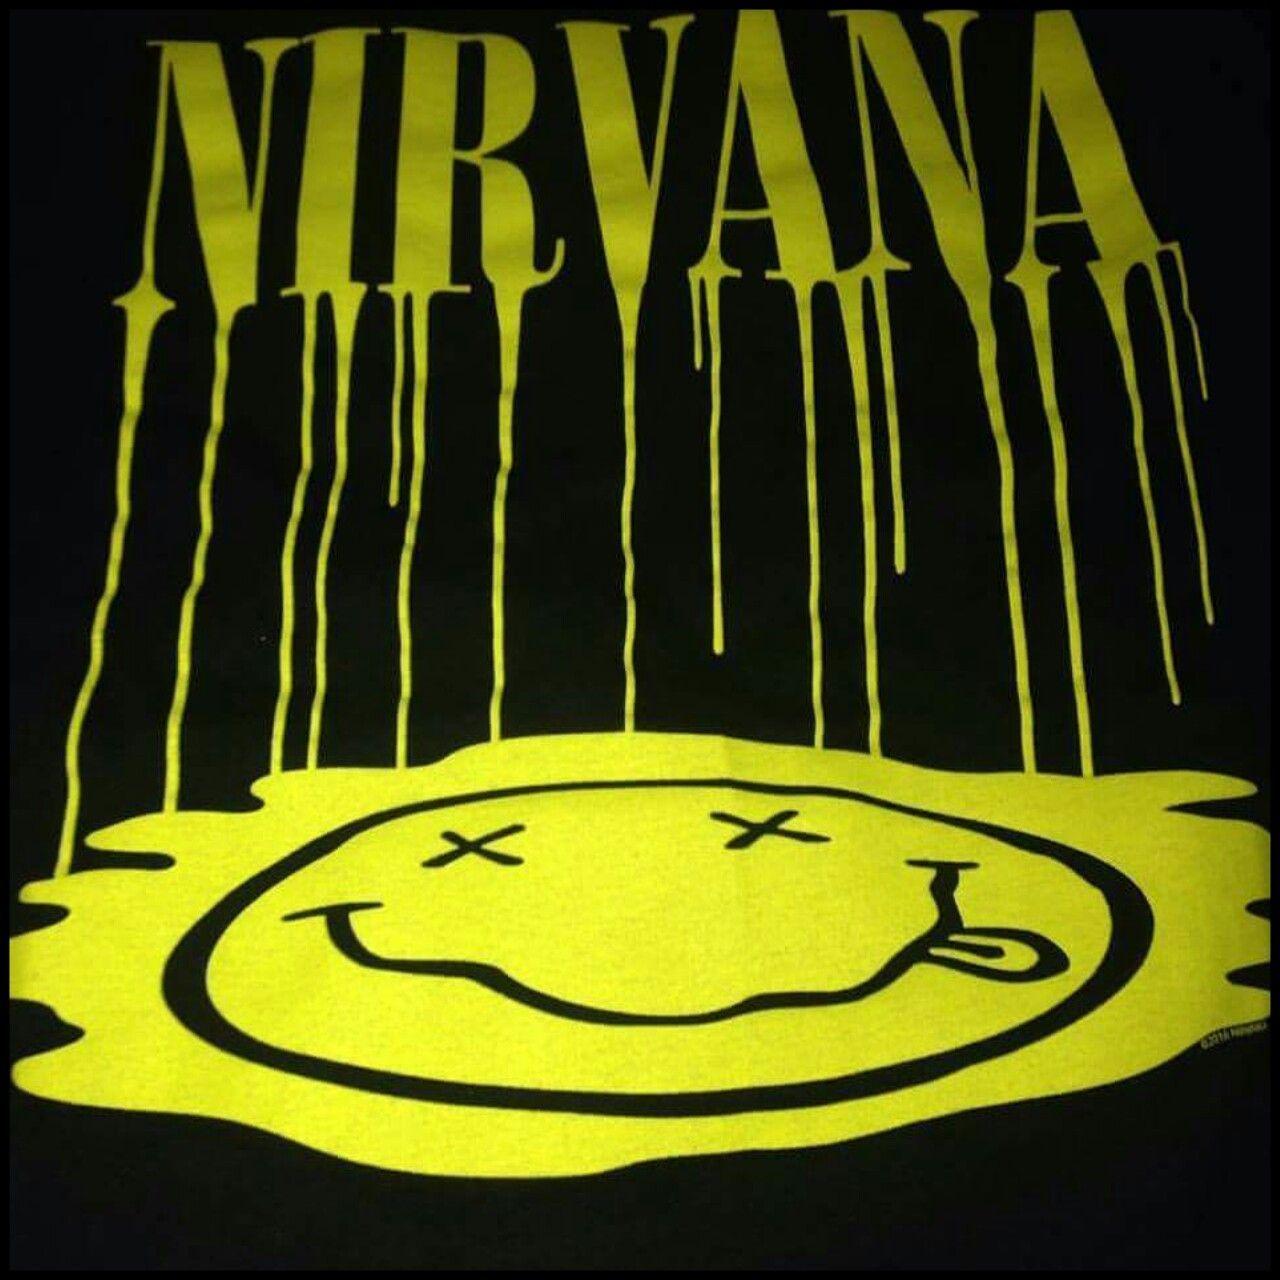 Nirvana Logo - Cool logo | All about Kurt Cobain | Pinterest | Kurt Cobain, Nirvana ...